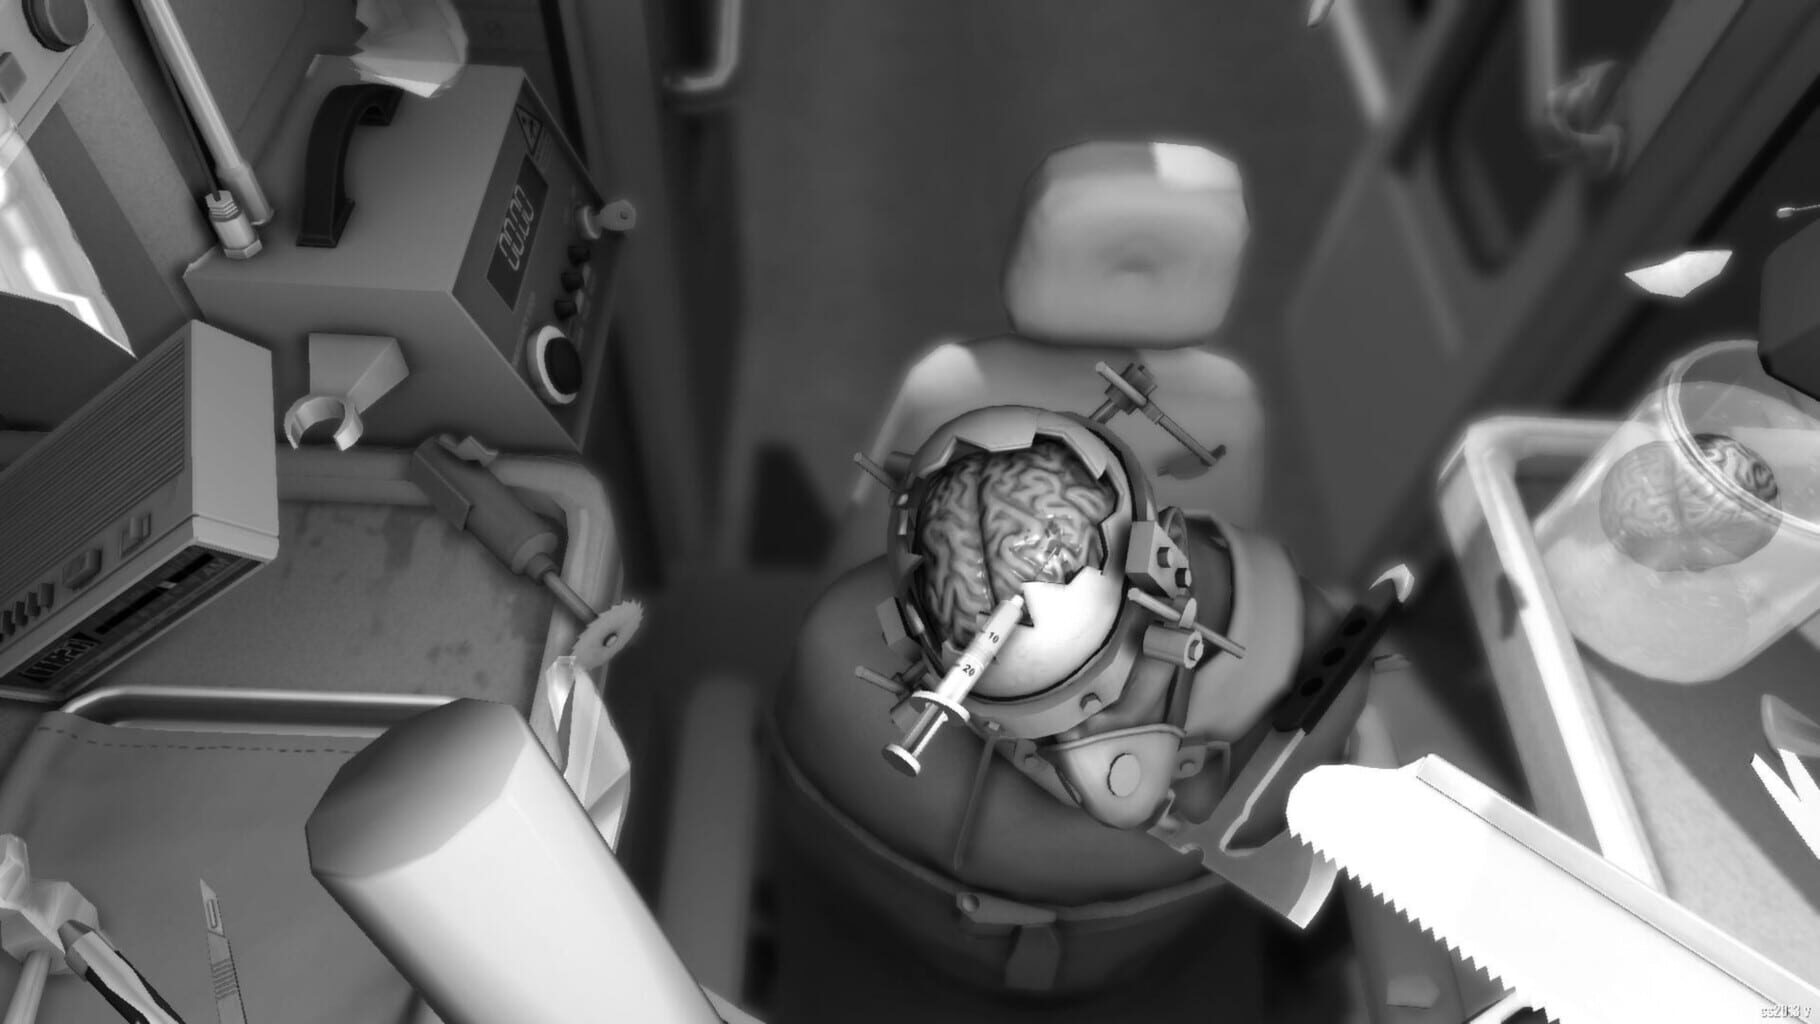 Captura de pantalla - Surgeon Simulator 2013